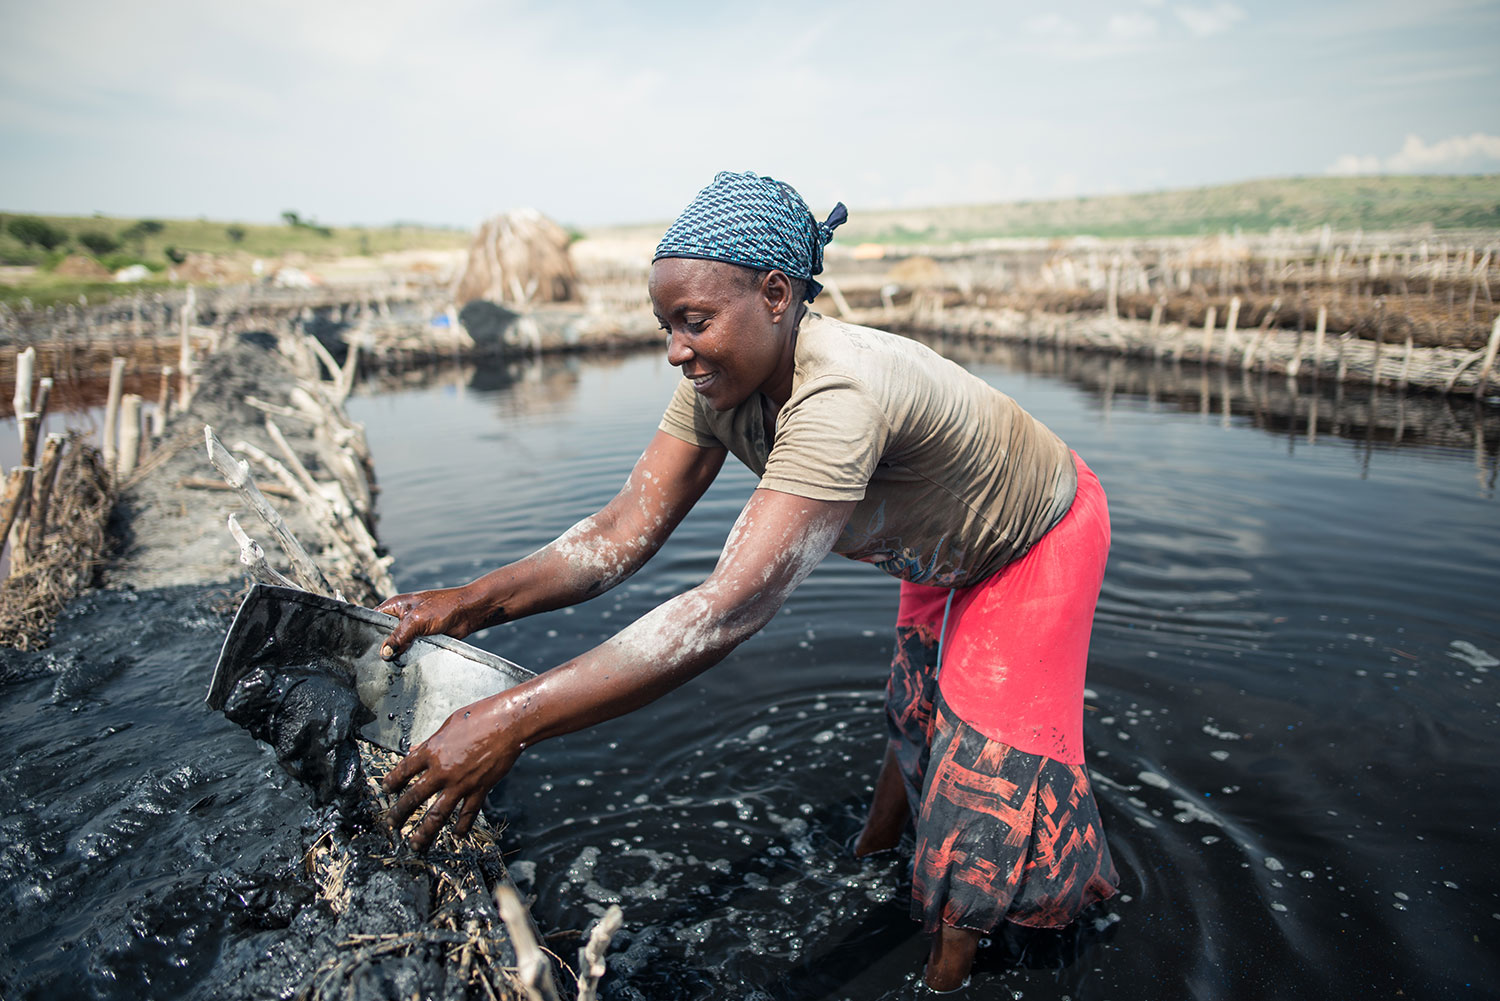 Katwe / Uganda - October 25, 2016: African woman working in the salt mining industry in a salty lake in Uganda